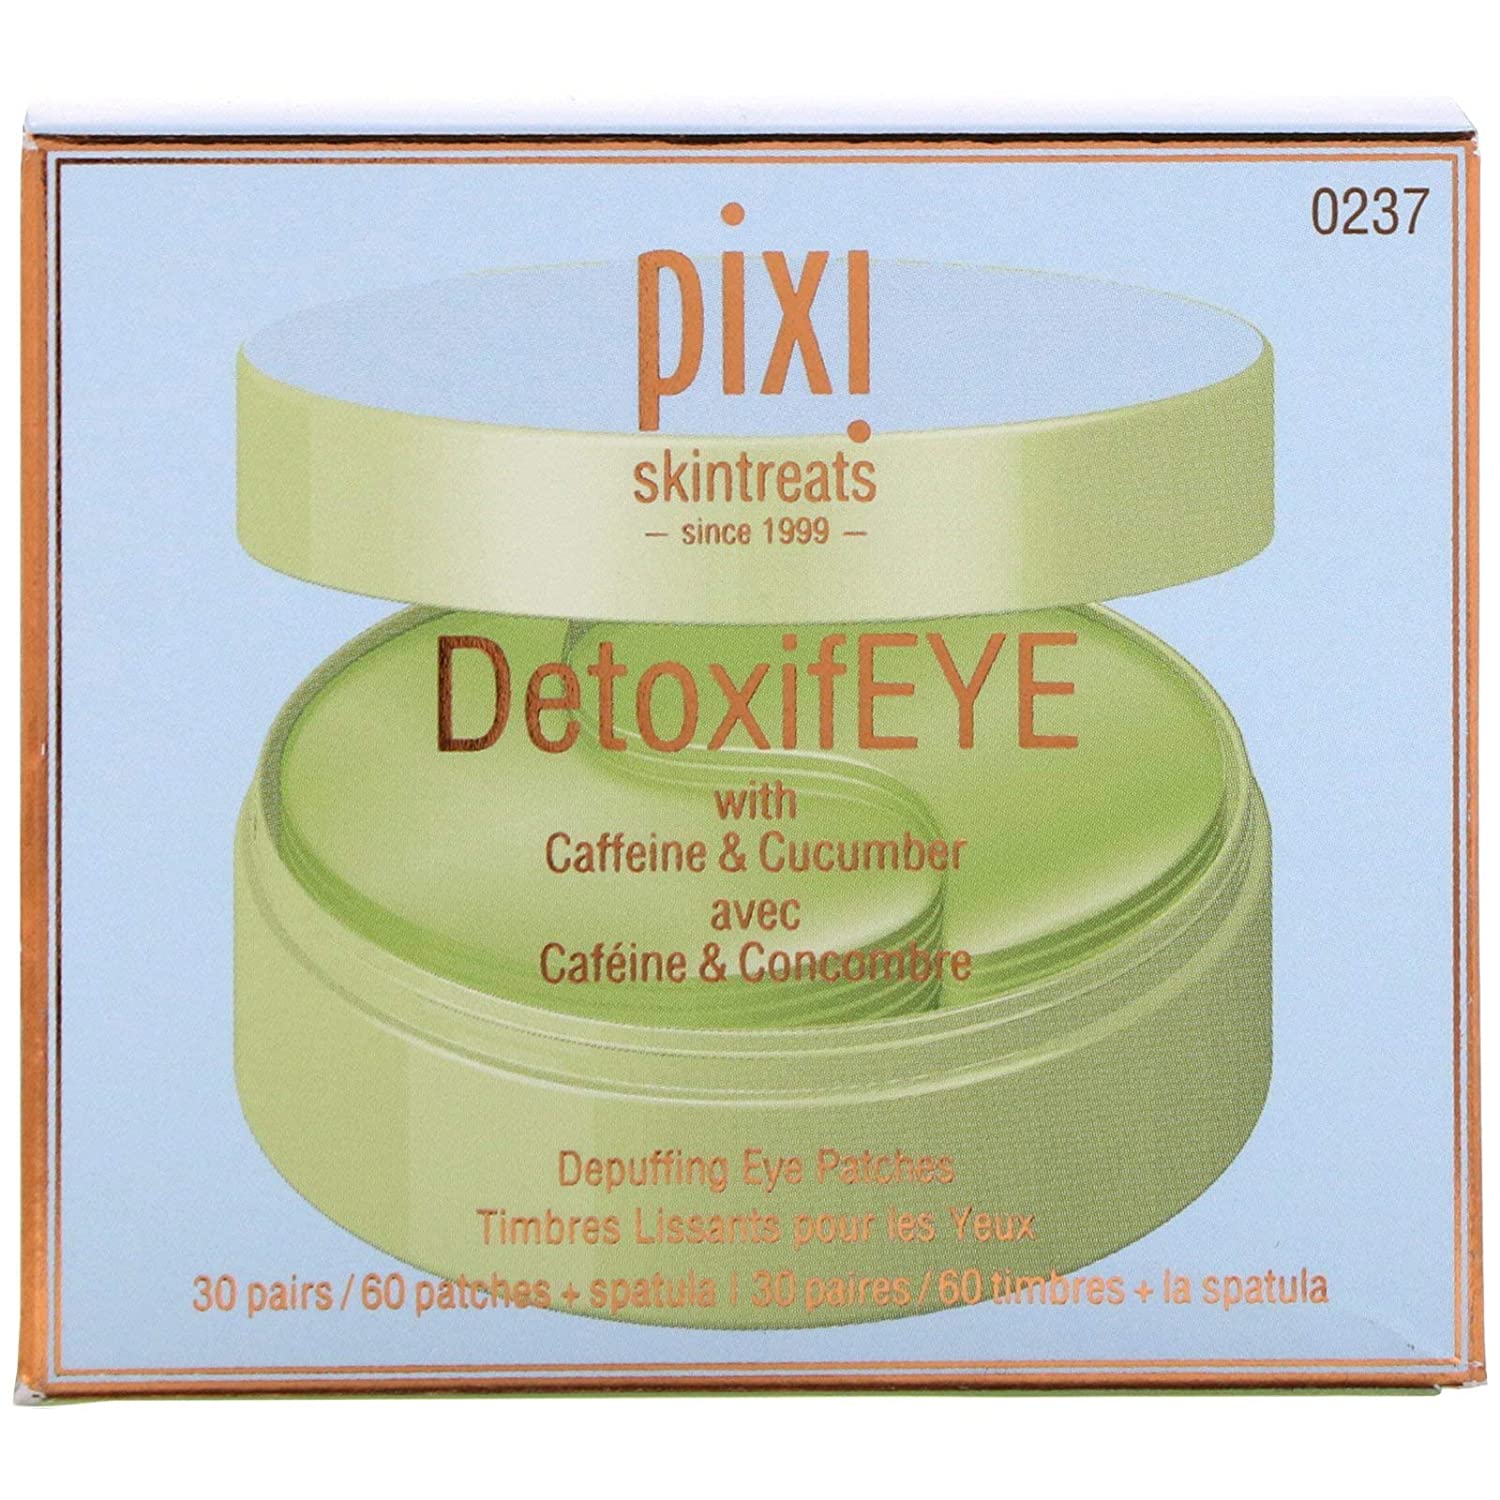 Unbekannt PIXI DetoxifEYE Augenklappen (30 Paar/60 Pflaster)